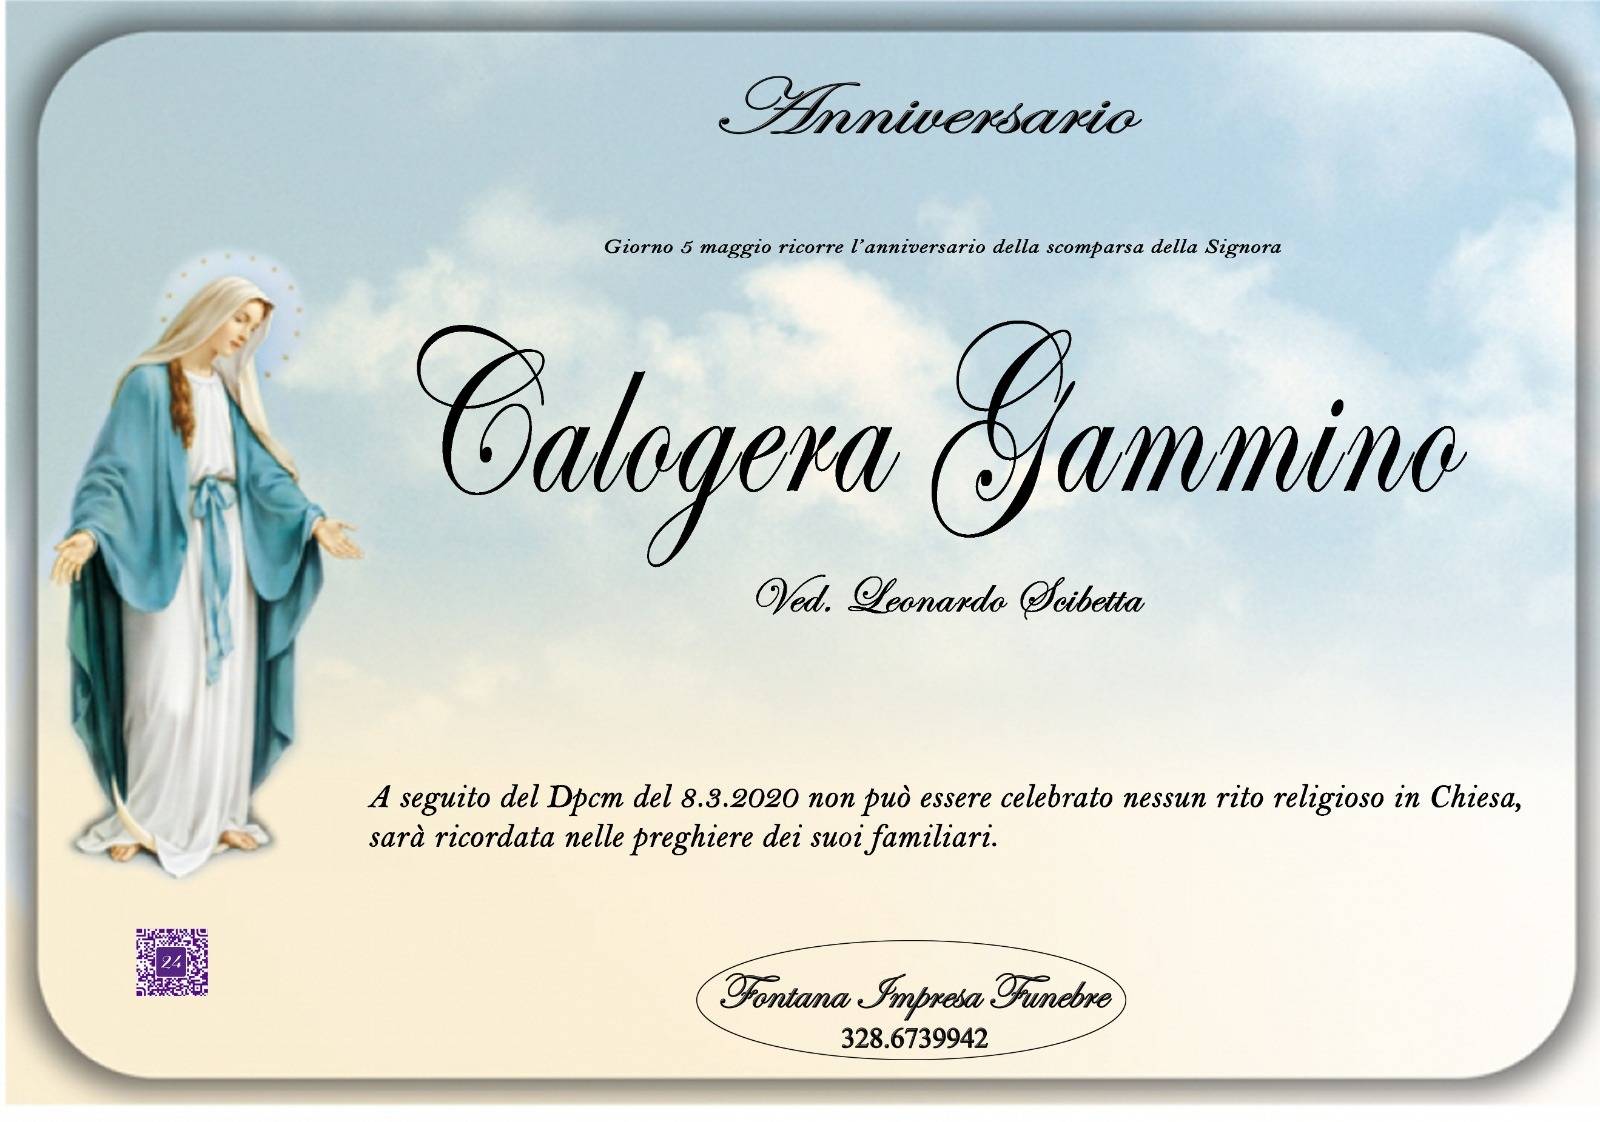 Calogera Gammino